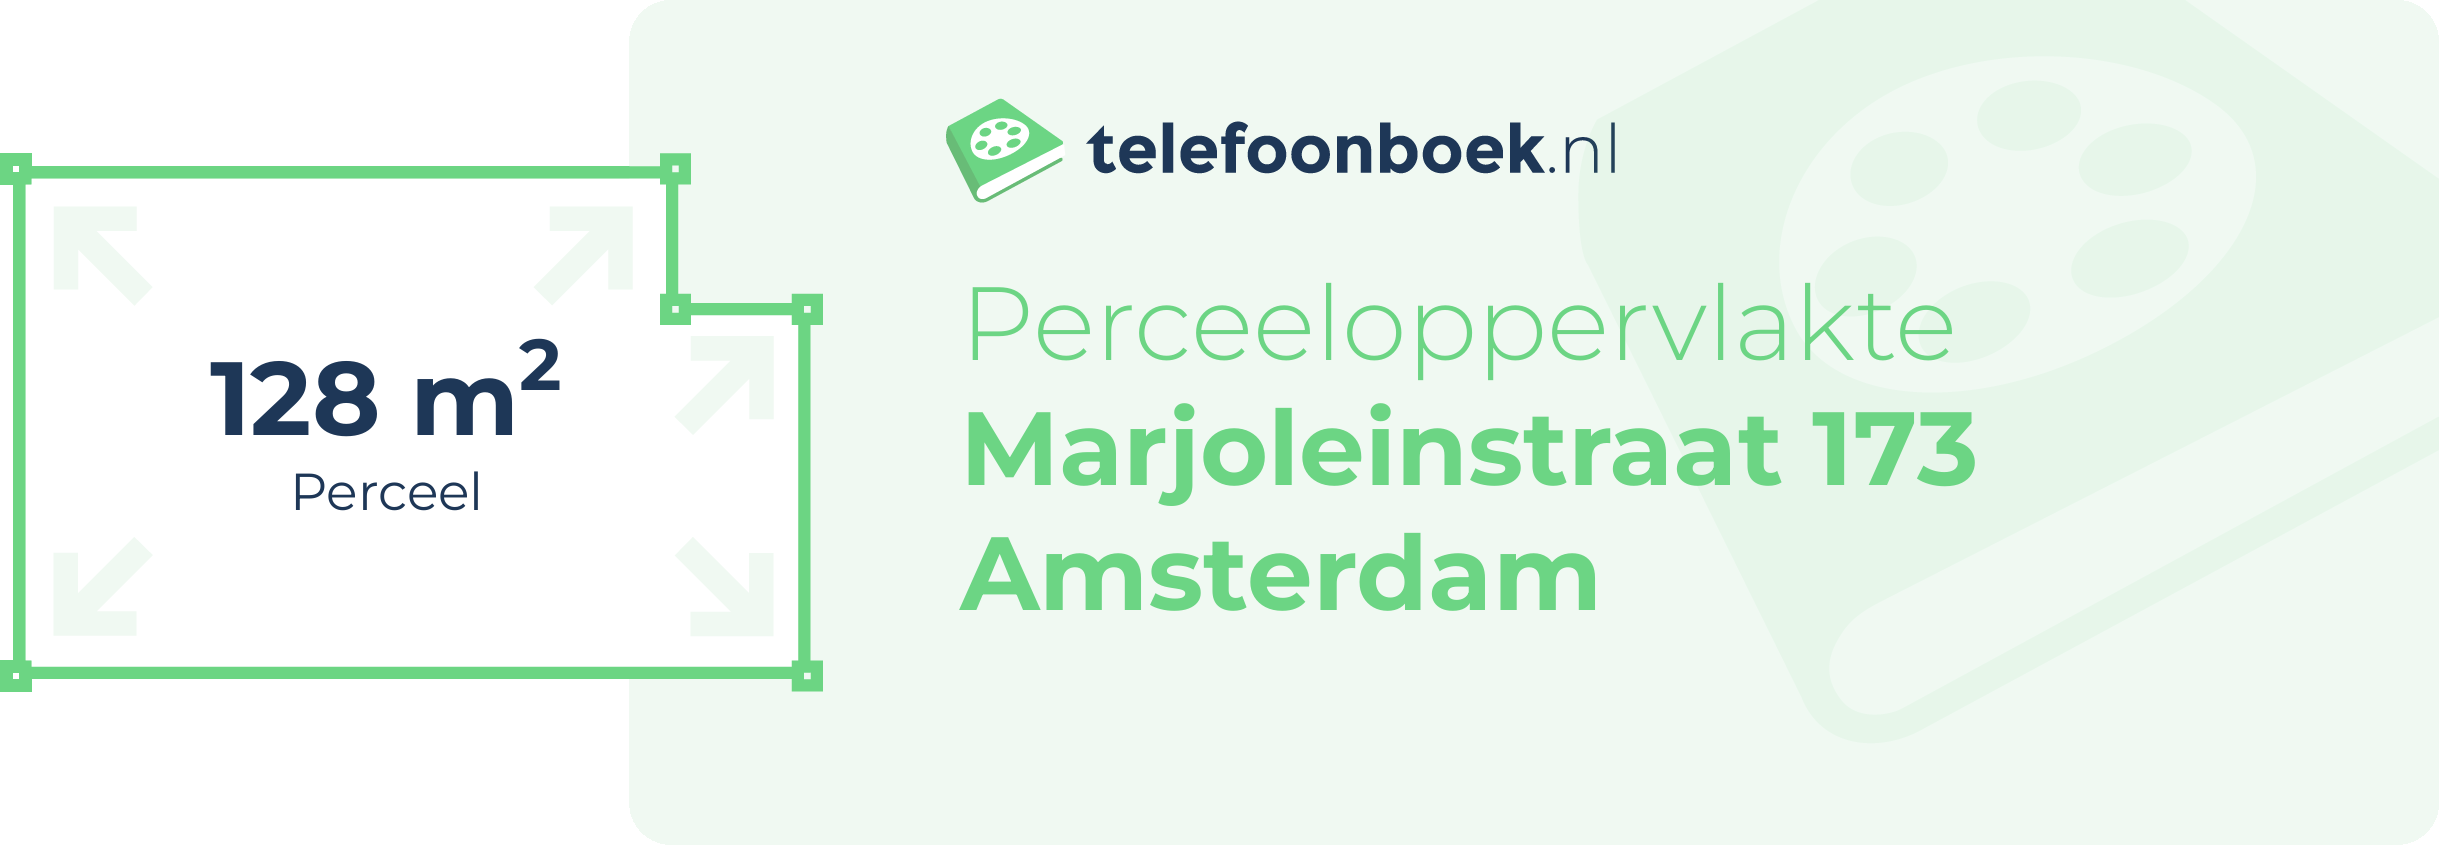 Perceeloppervlakte Marjoleinstraat 173 Amsterdam